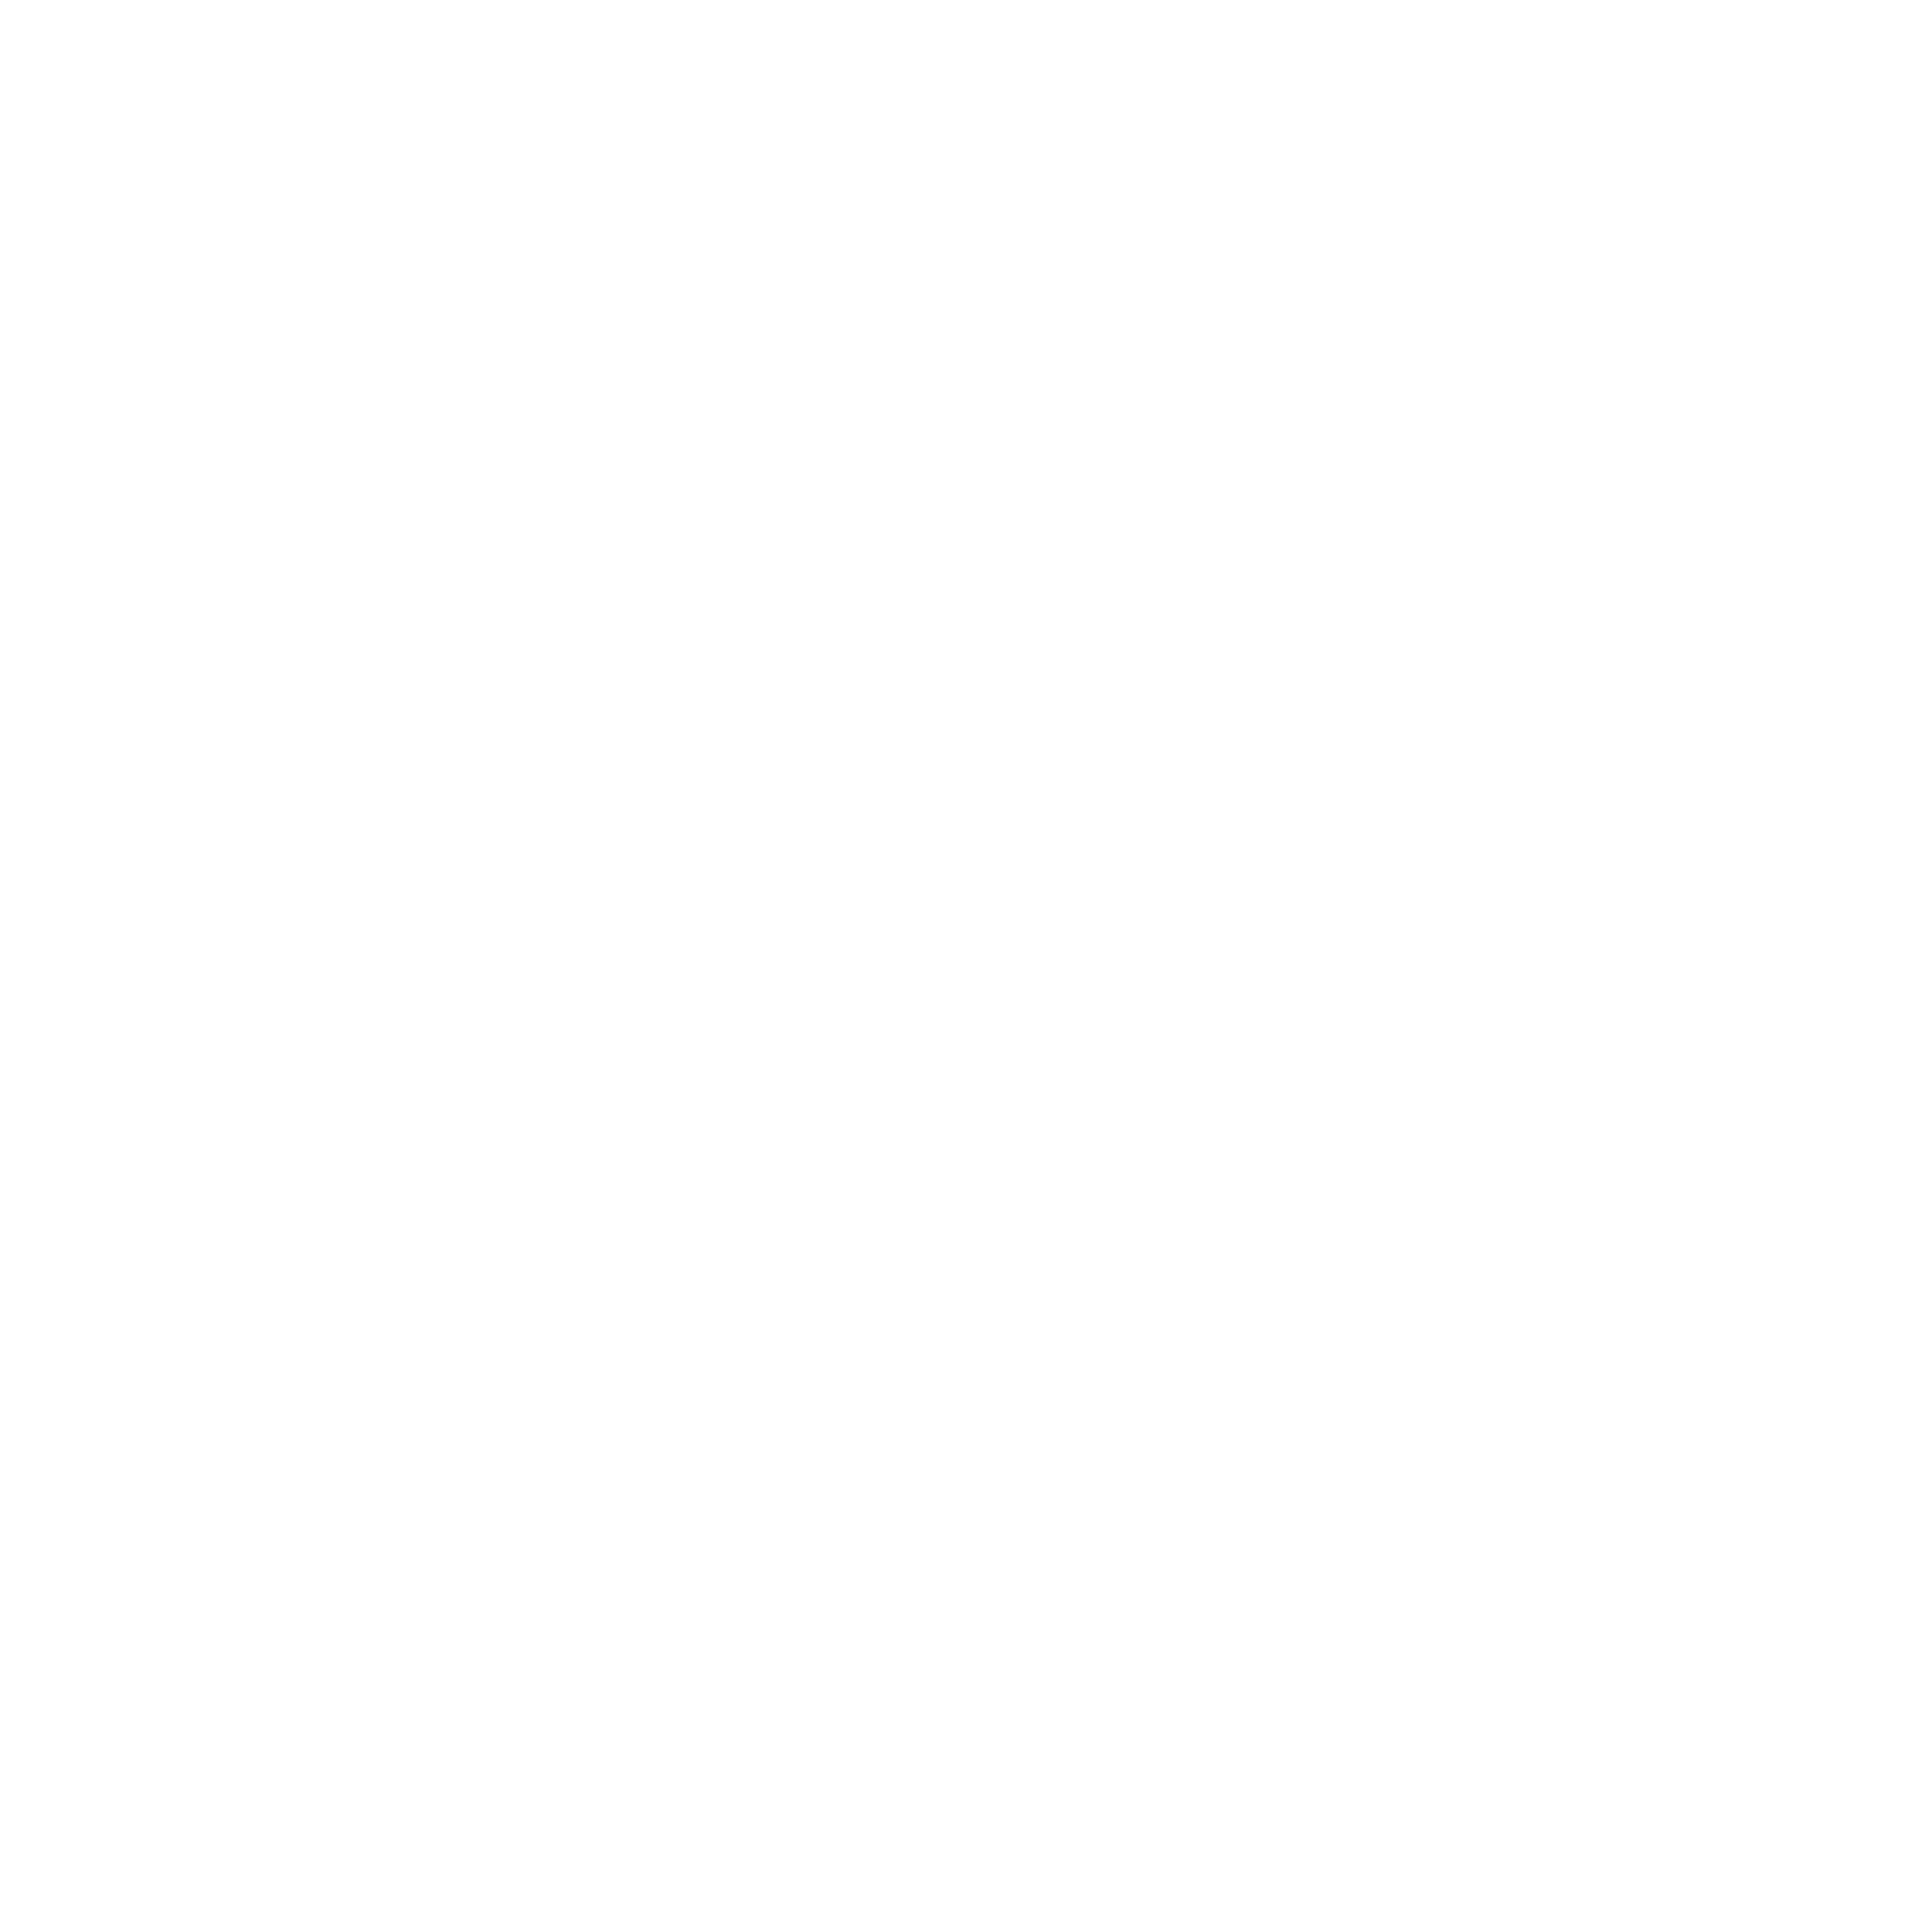 AAHSFF 2021 BEST CINEMATOGRAPHY Nominee